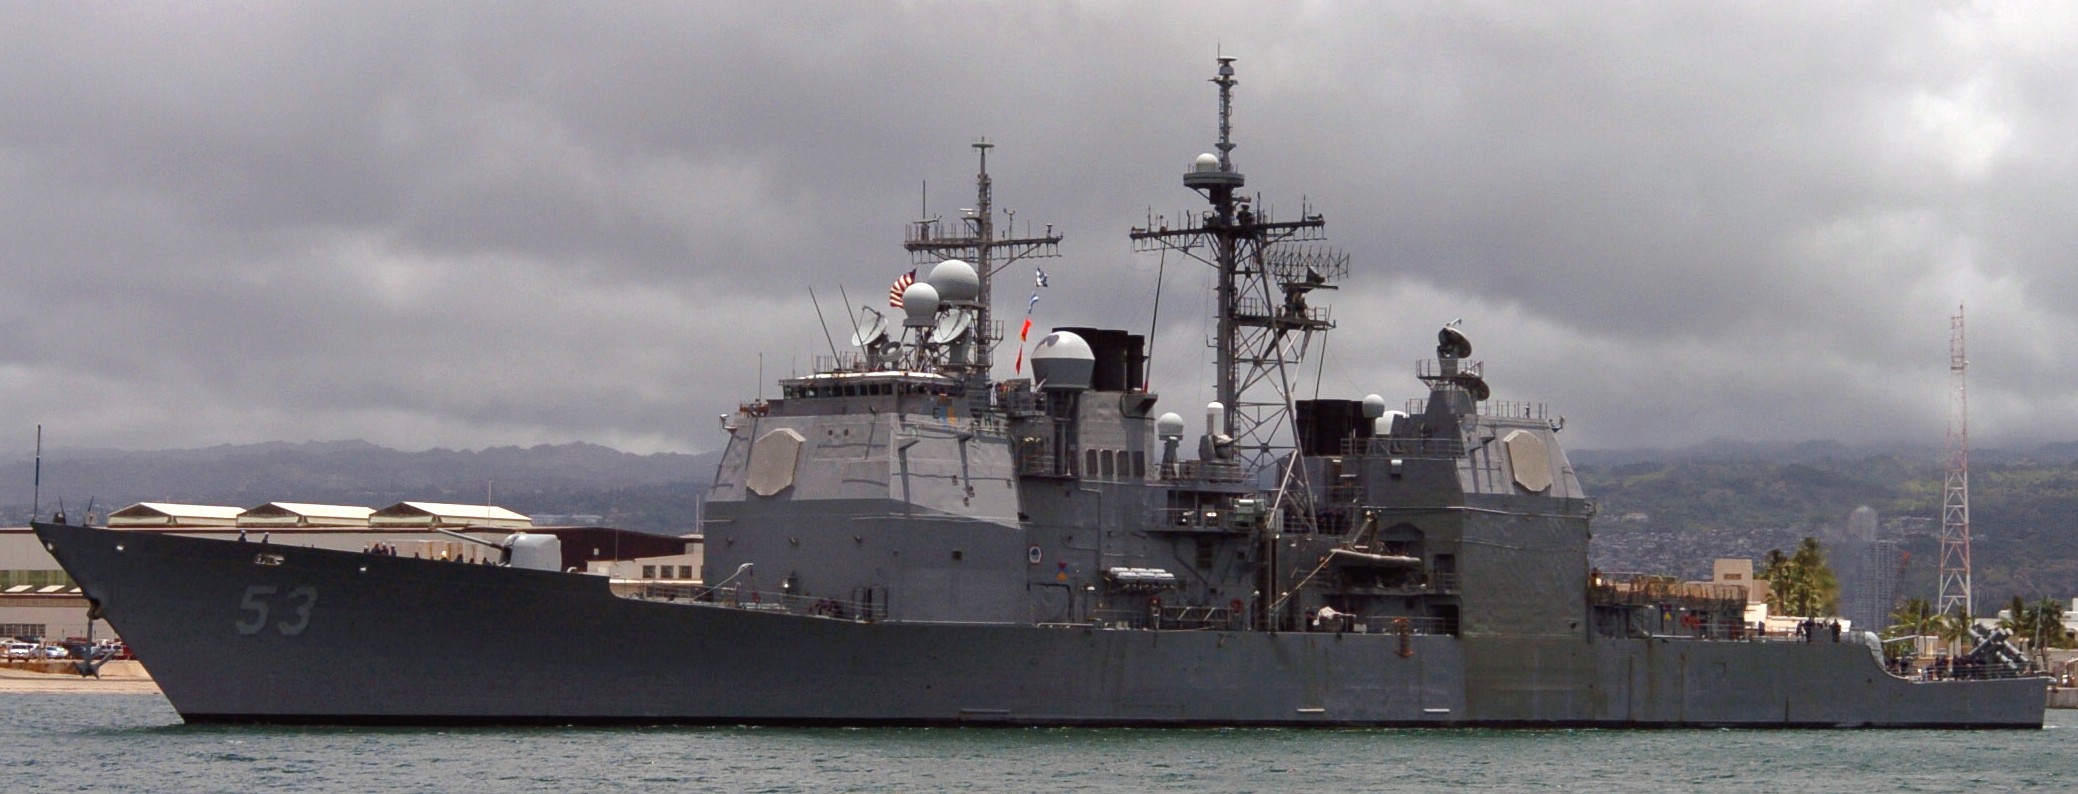 cg-53 uss mobile bay ticonderoga class guided missile cruiser aegis naval station pearl harbor hawaii 35